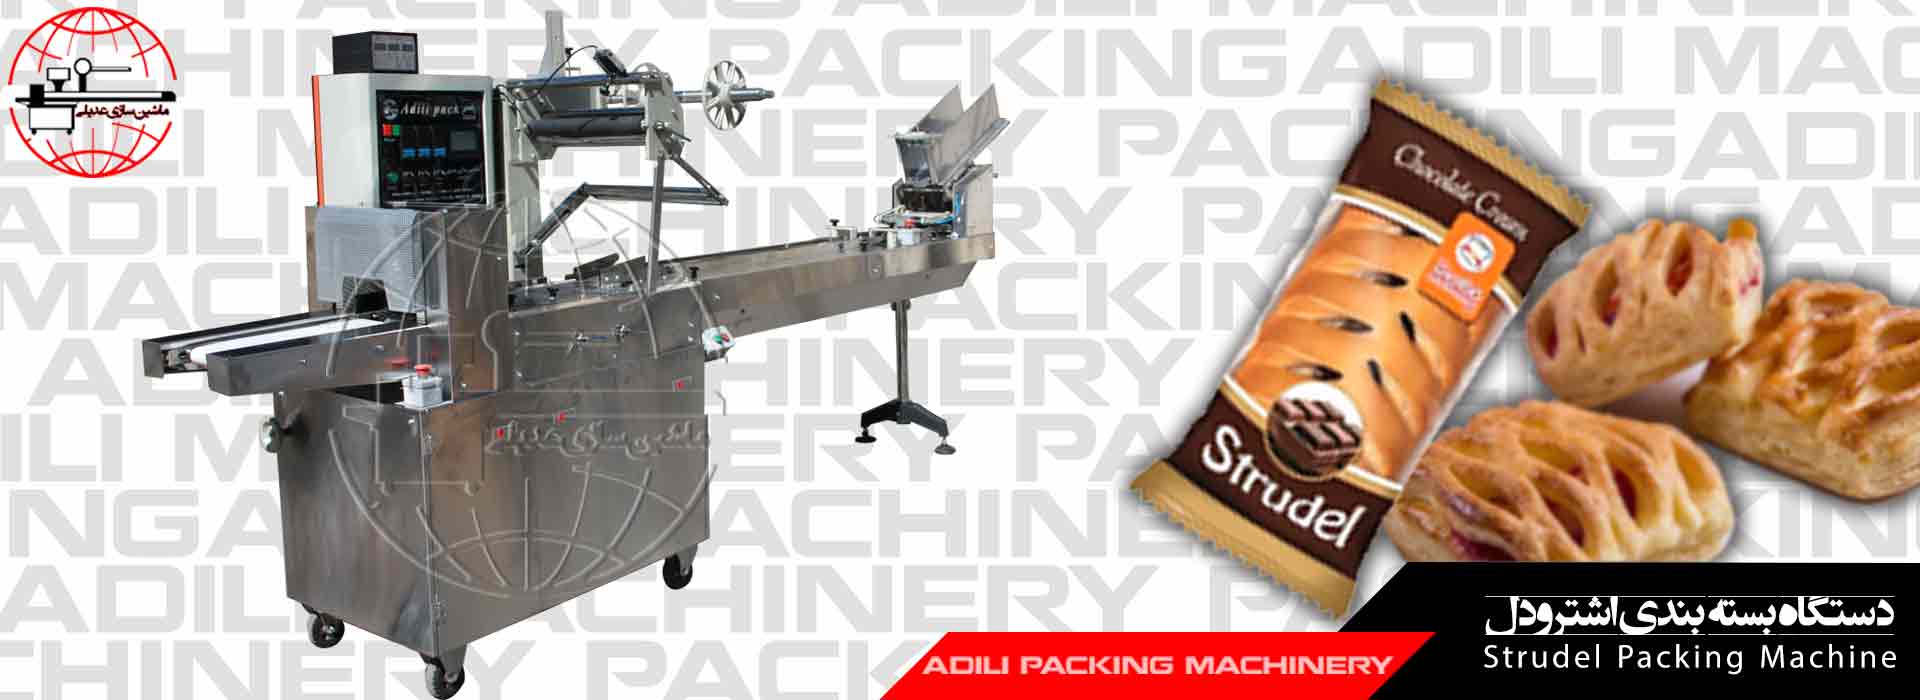 strodell packing machine